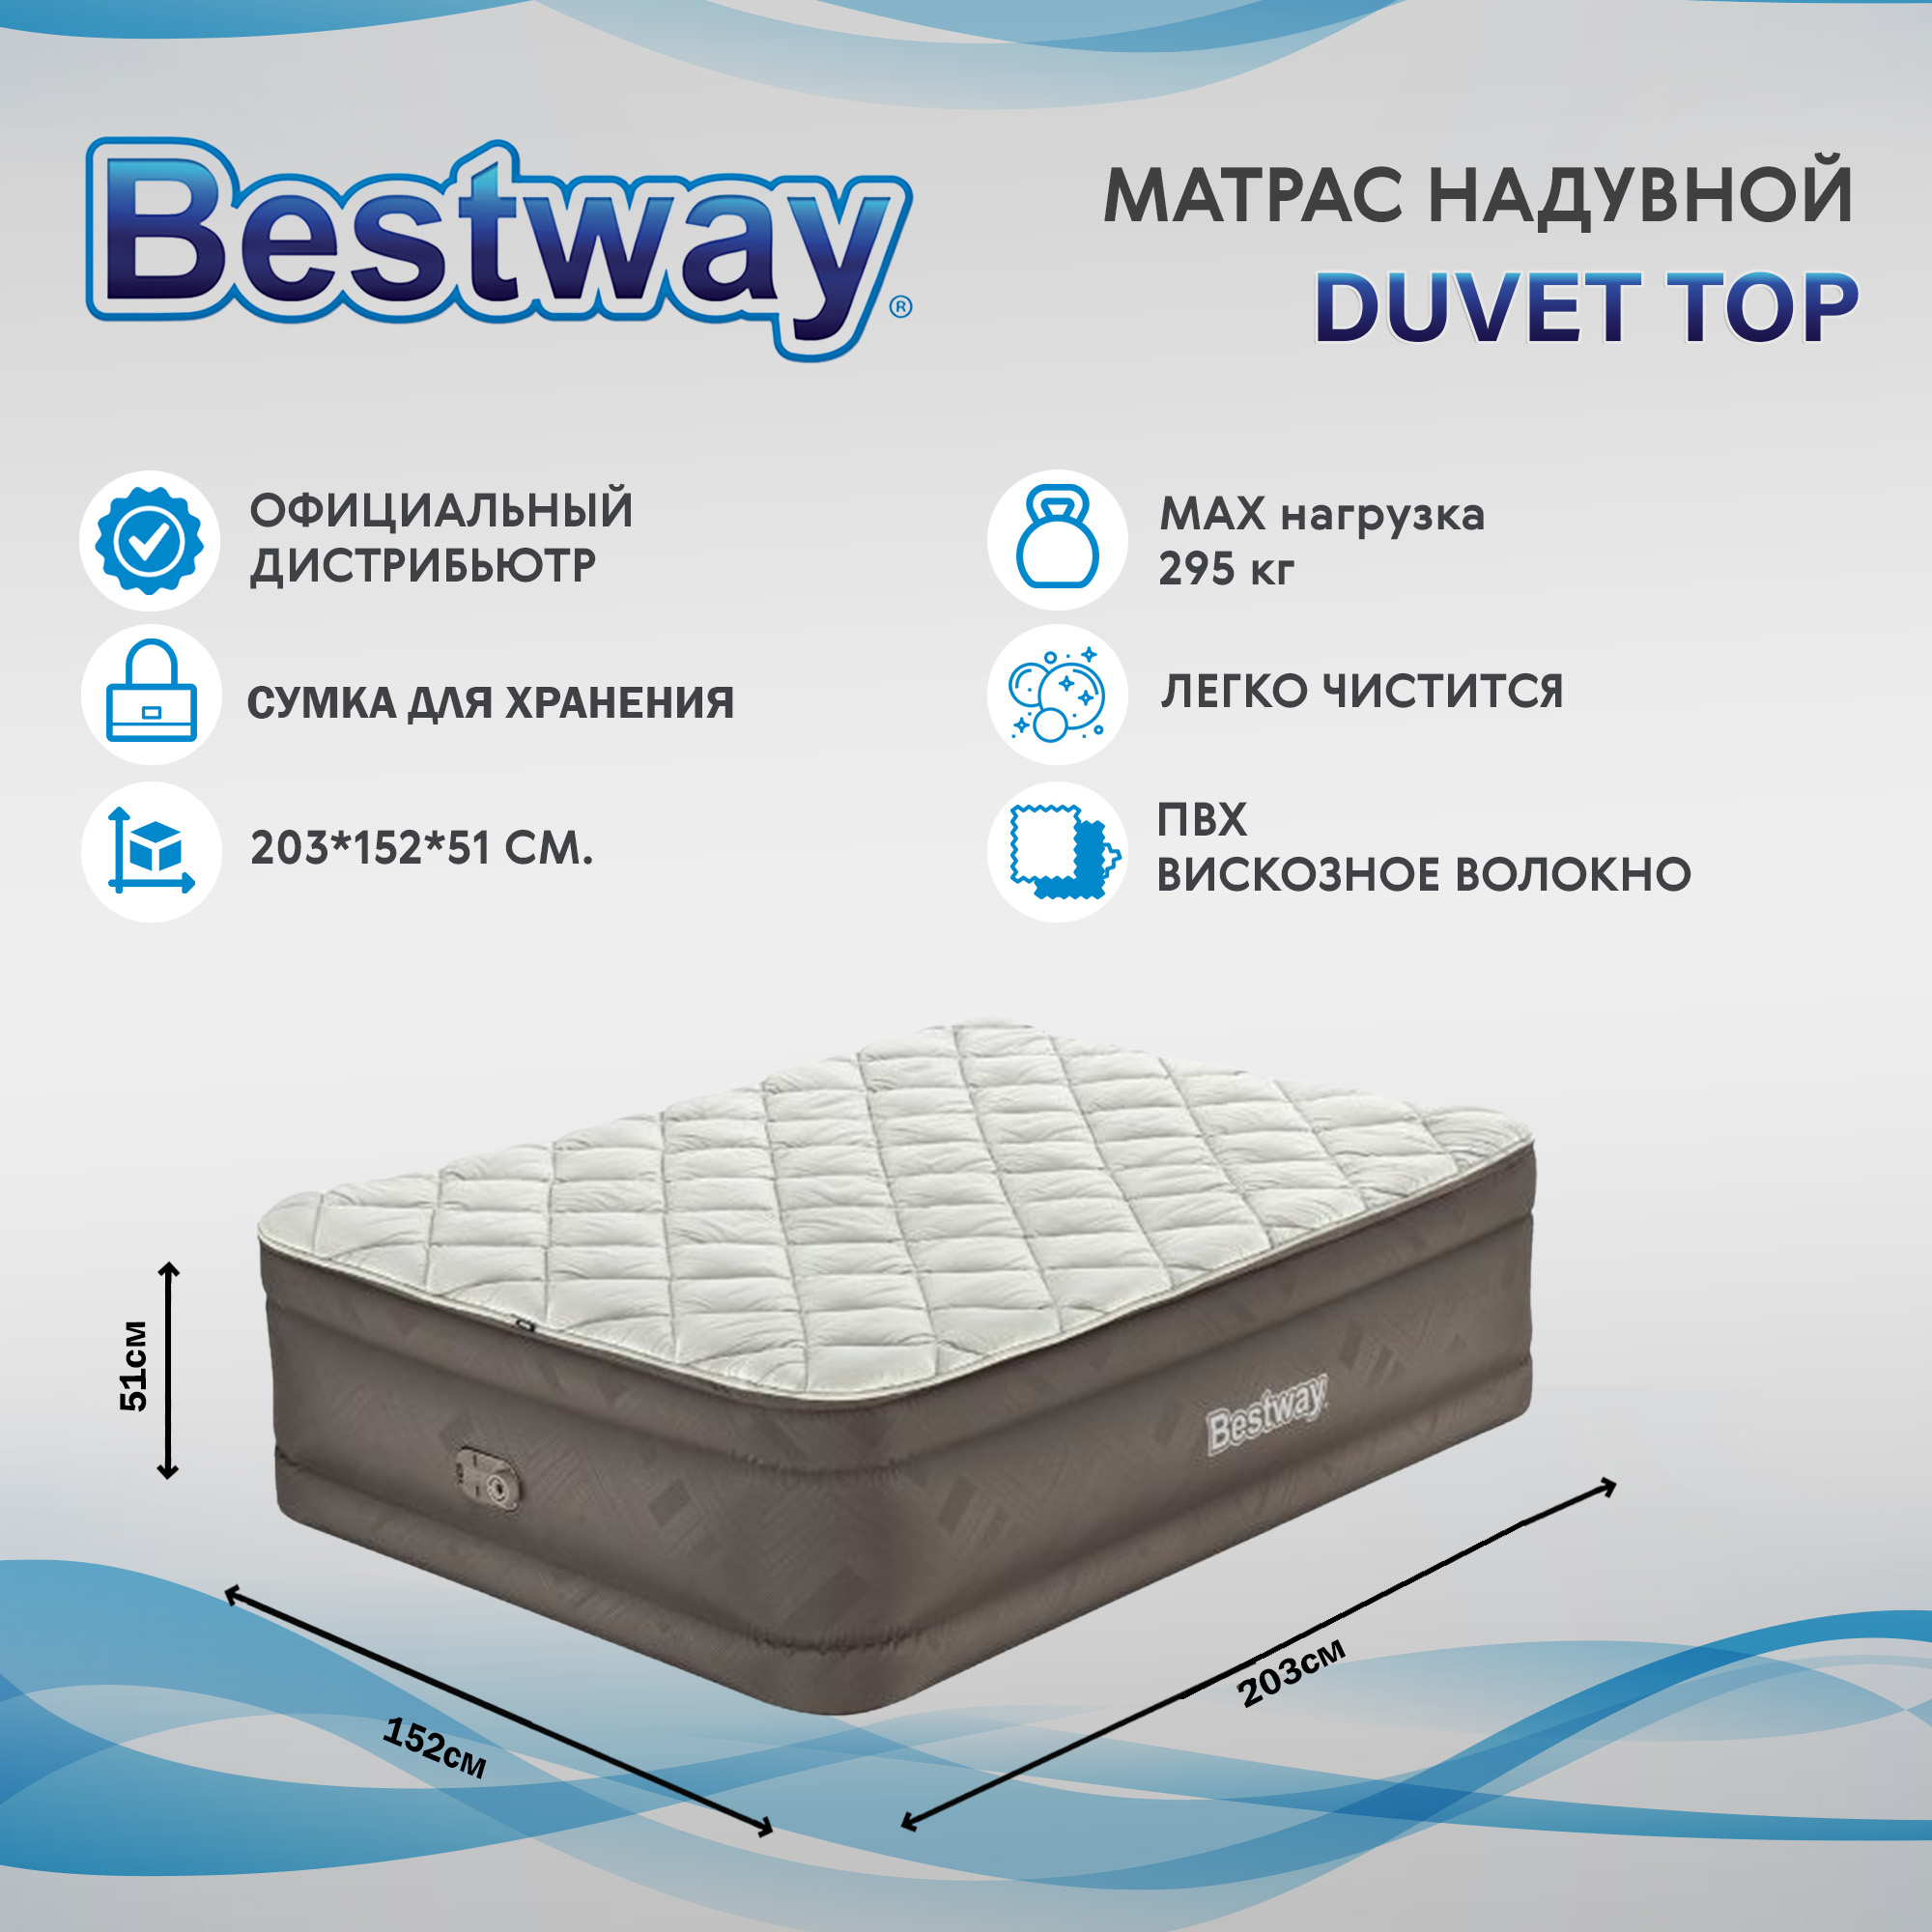 Матрас надувной Bestway Duvet top 203х152х51 см, цвет коричневый - фото 2